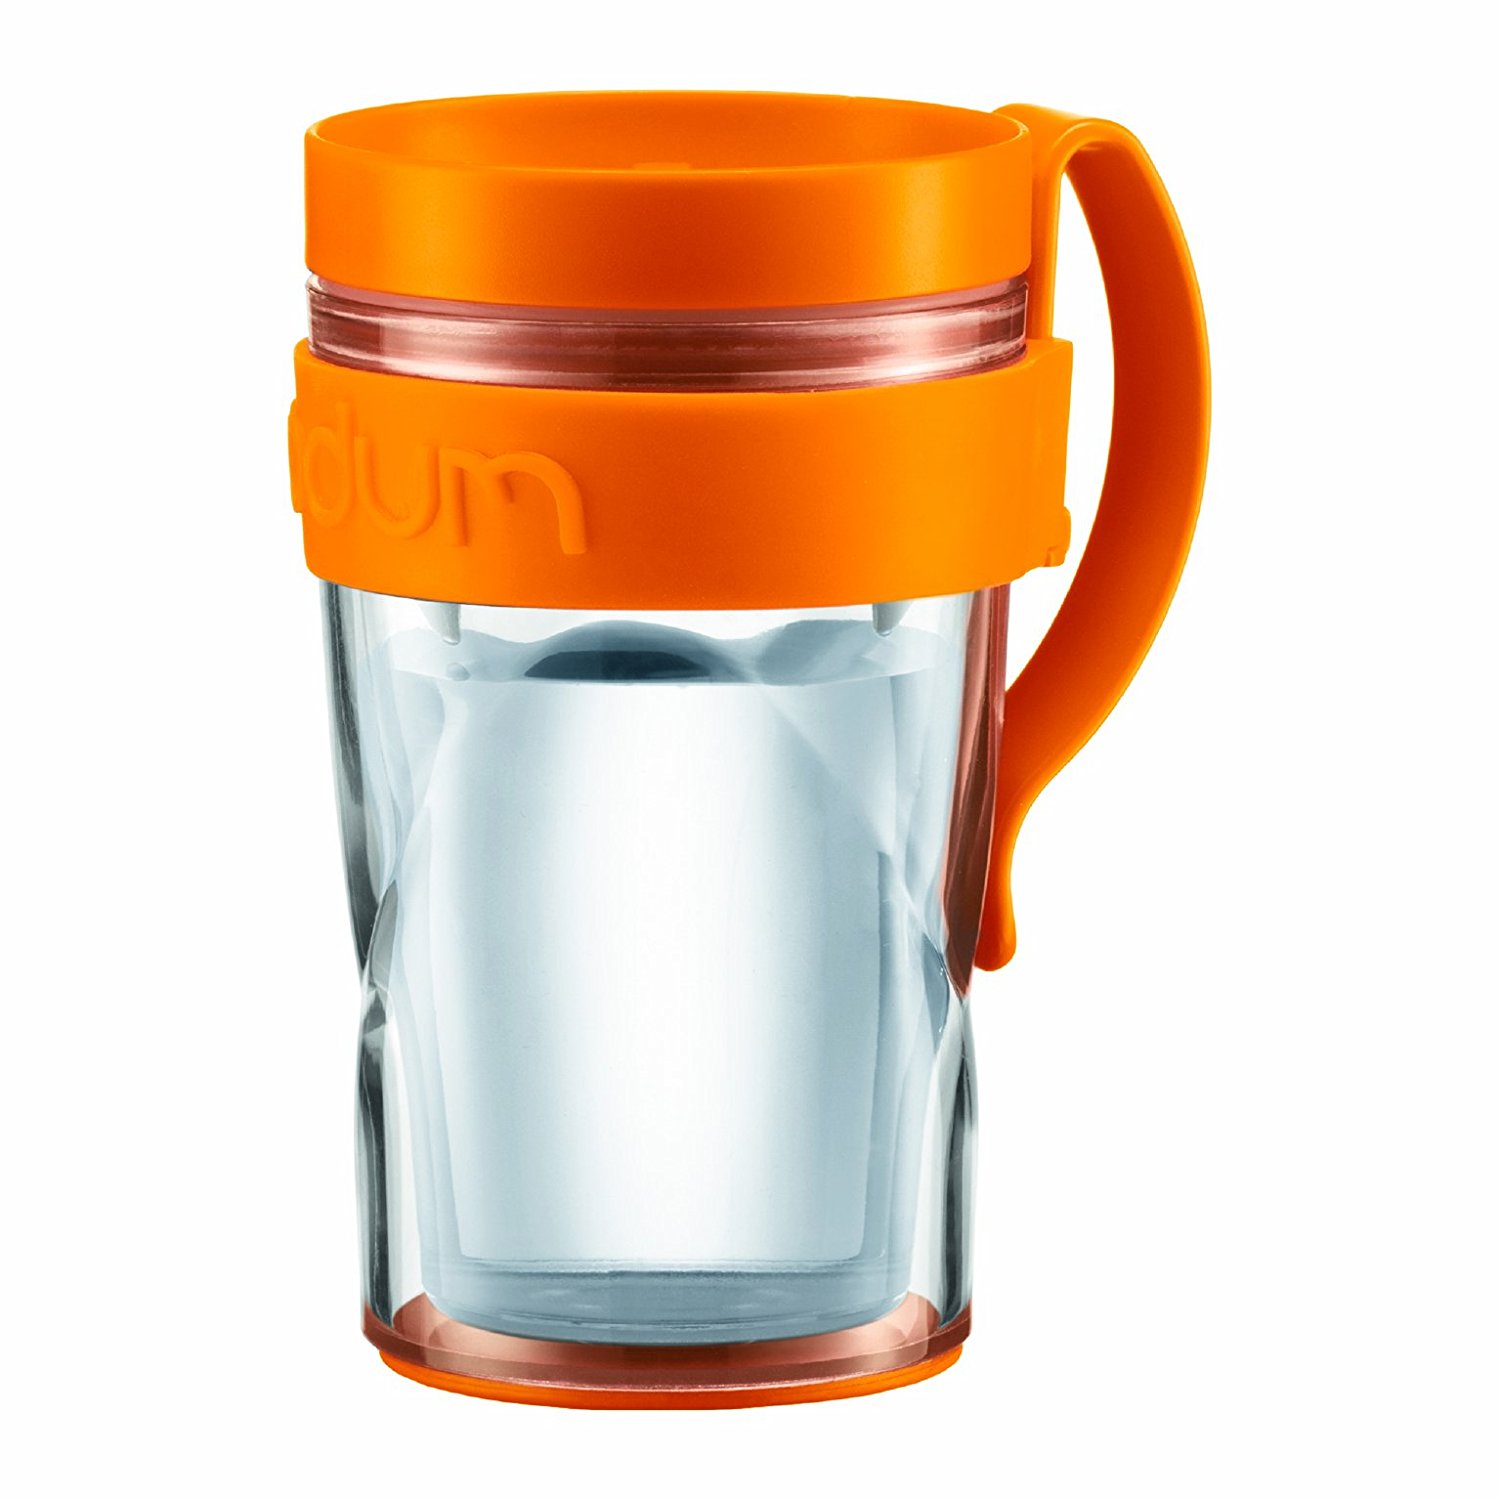 Bodum Travel Mug Orange (0.25 L) The Potlok